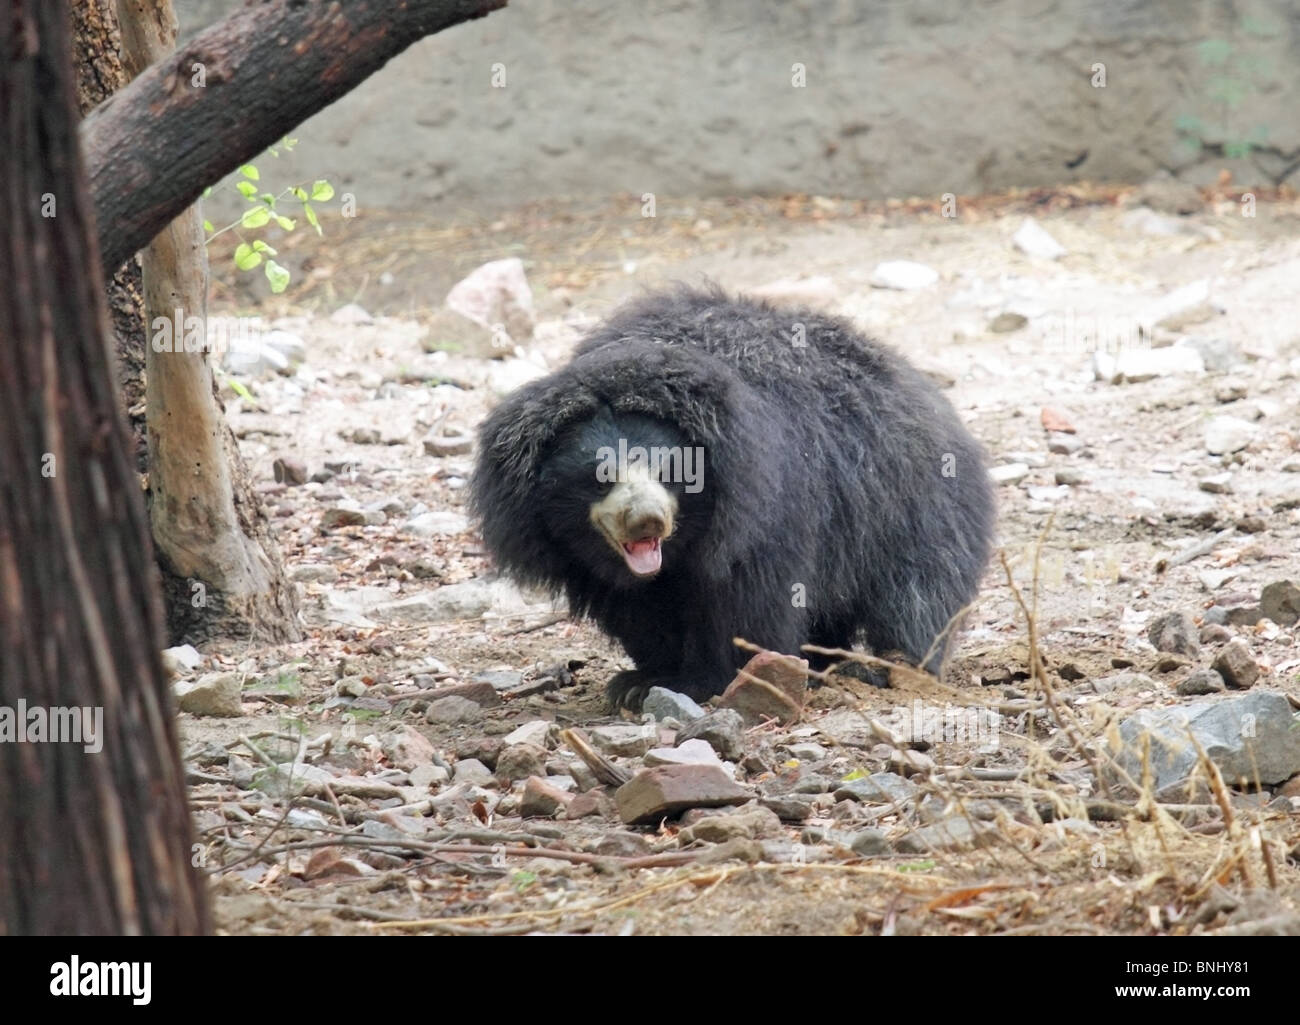 A Sloth Bear portrait shot taken in New Delhi Zoo, India Stock Photo